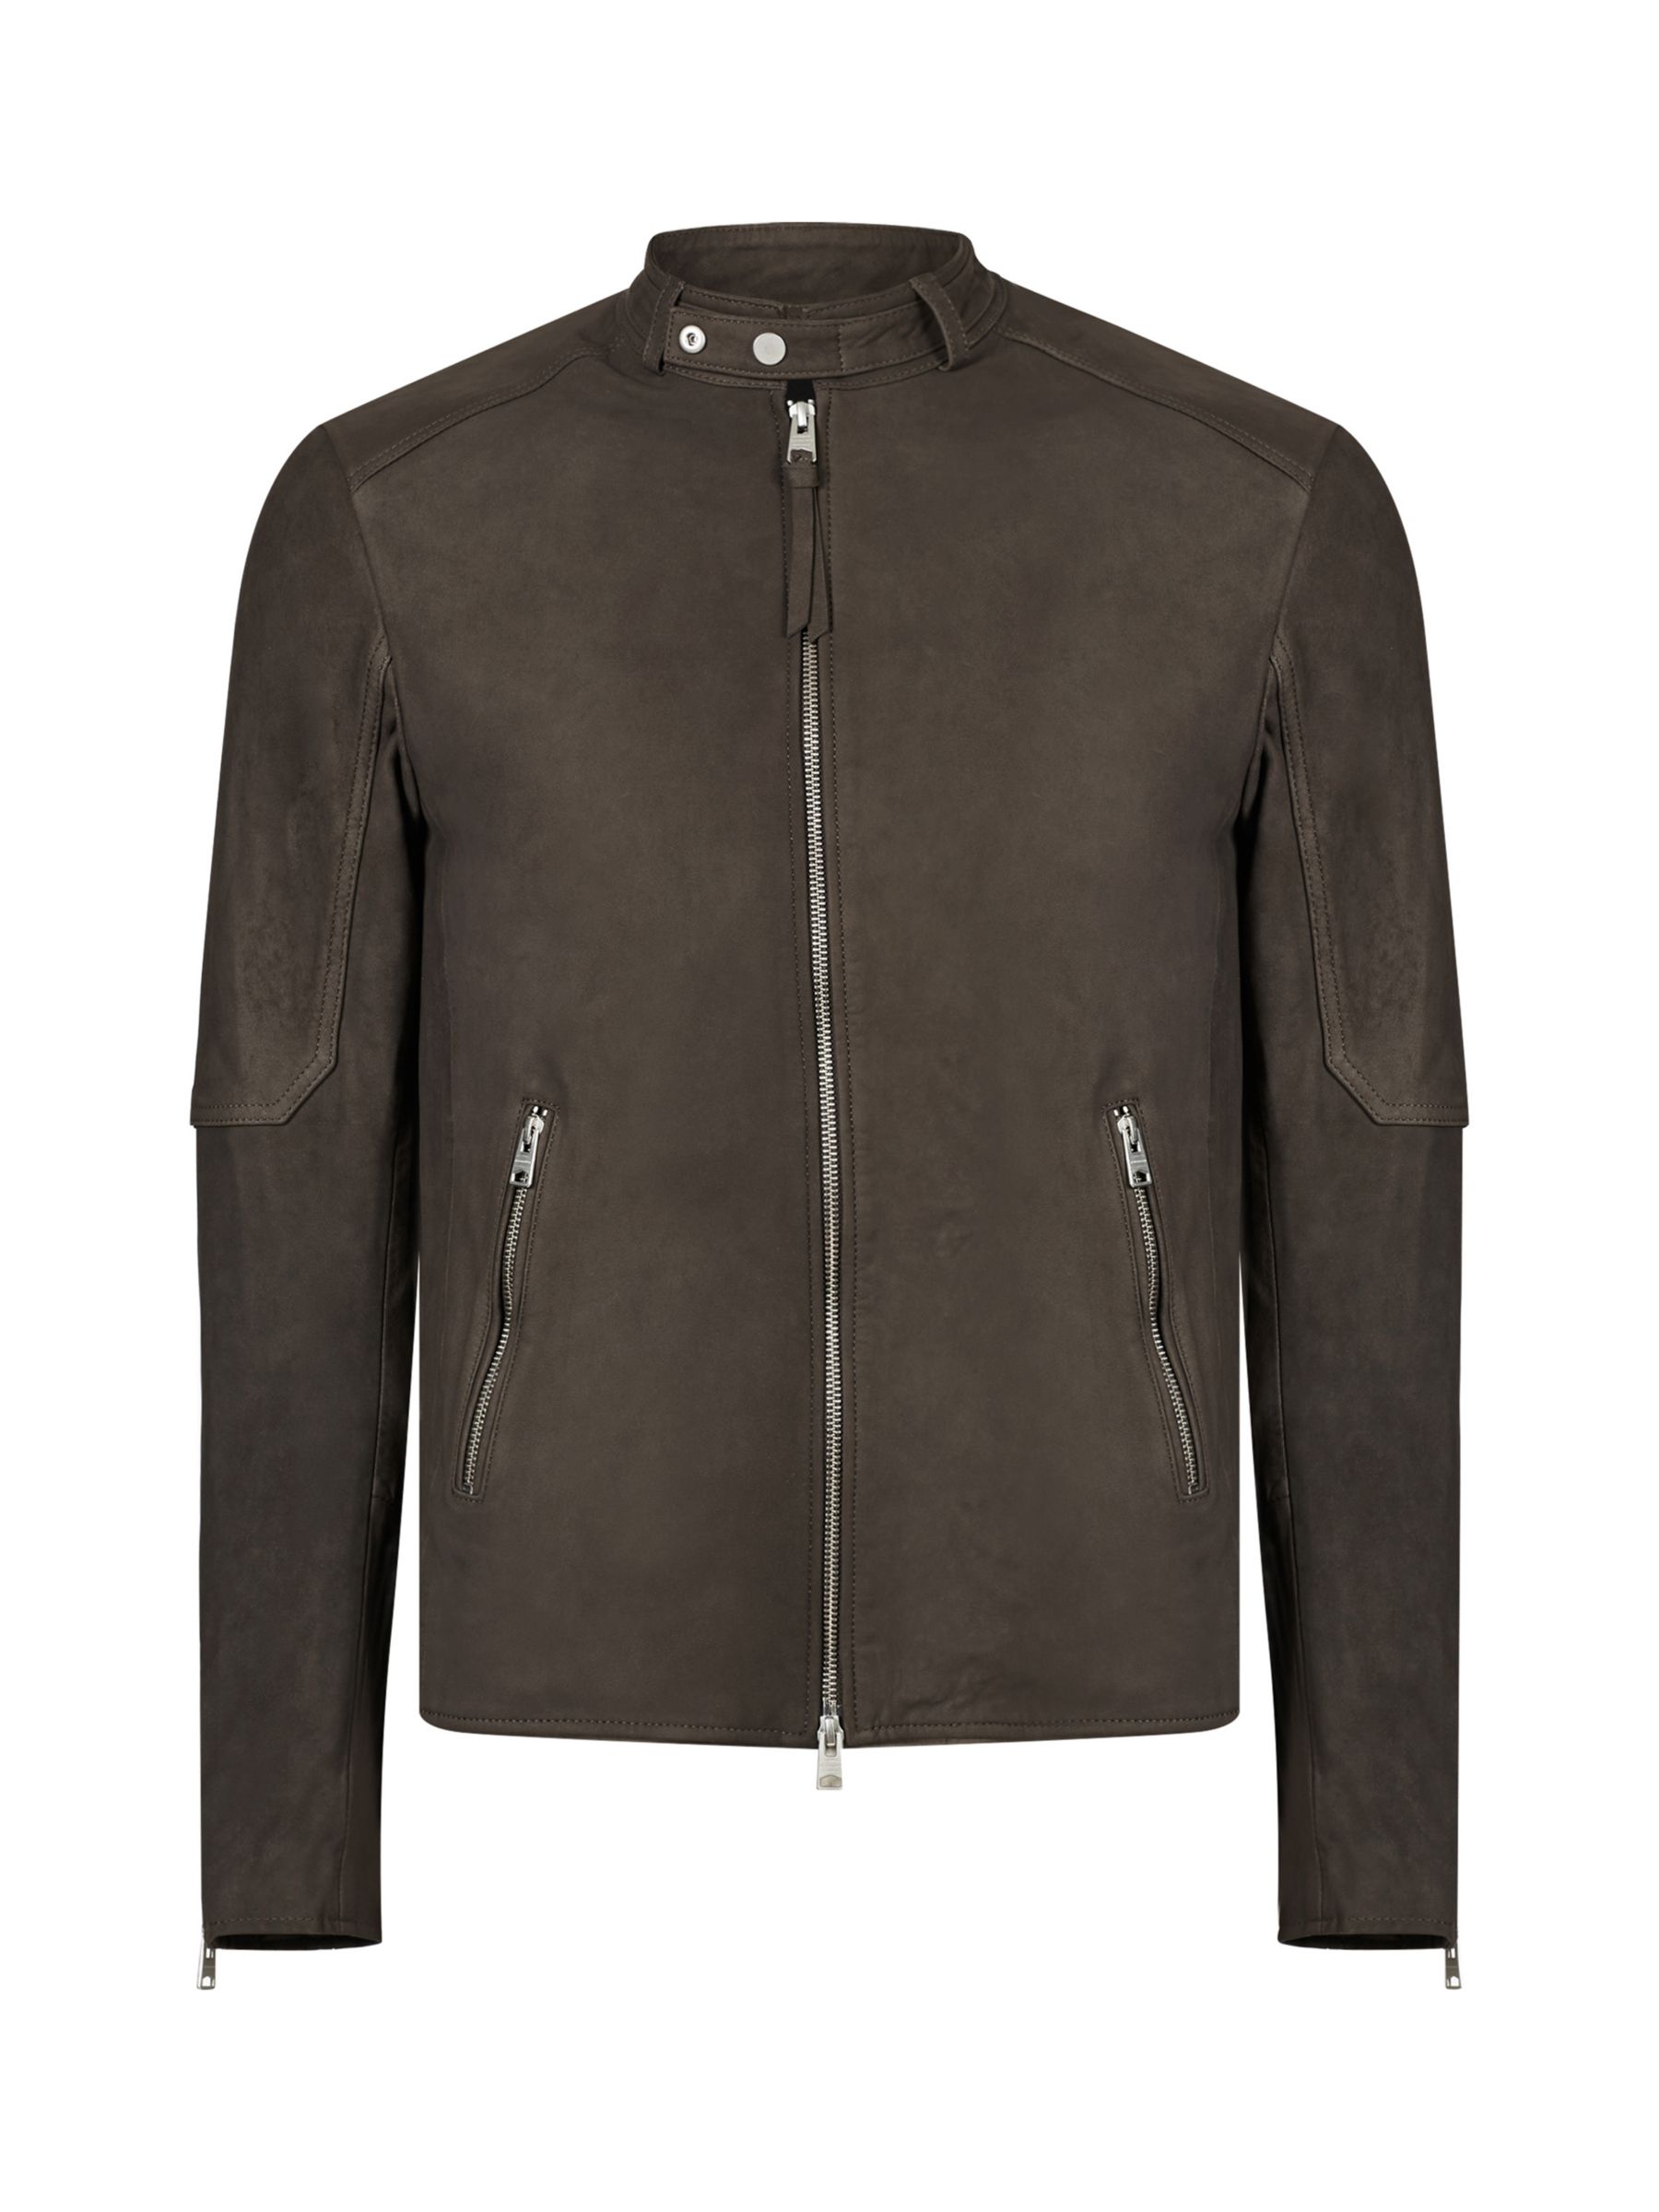 AllSaints Cora Leather Jacket, Charcoal at John Lewis & Partners